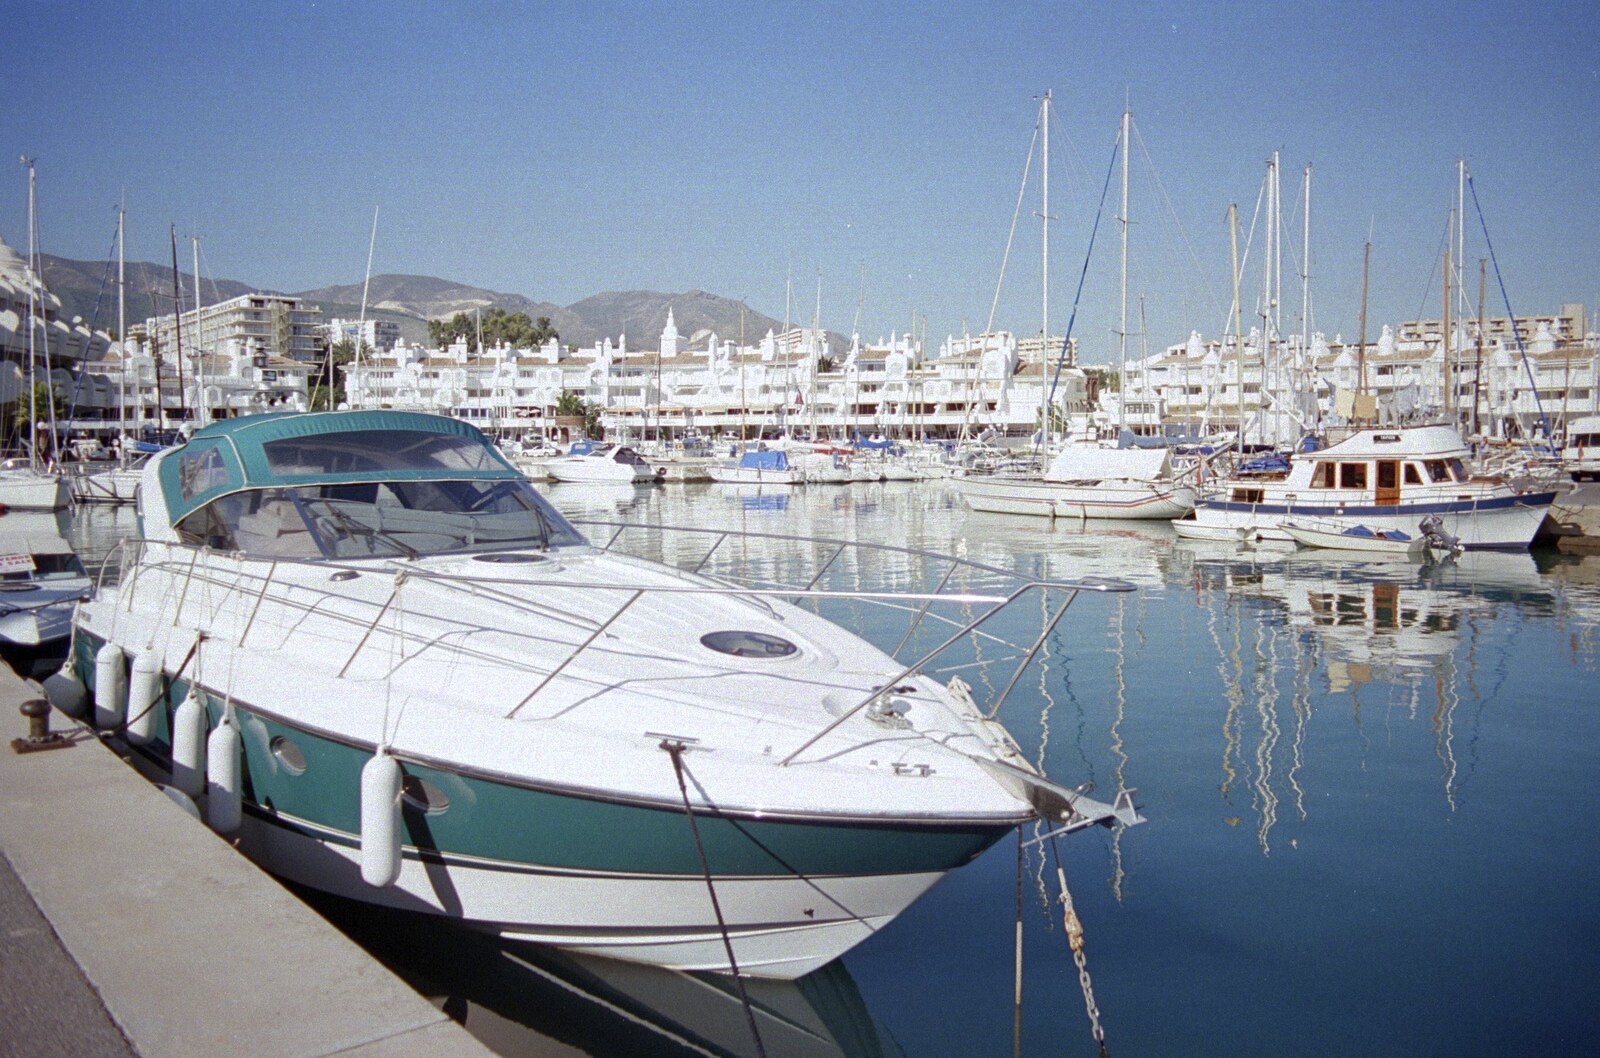 A luxury motor cruiser from The CISU Massive do Malaga, Spain - November 14th 1998